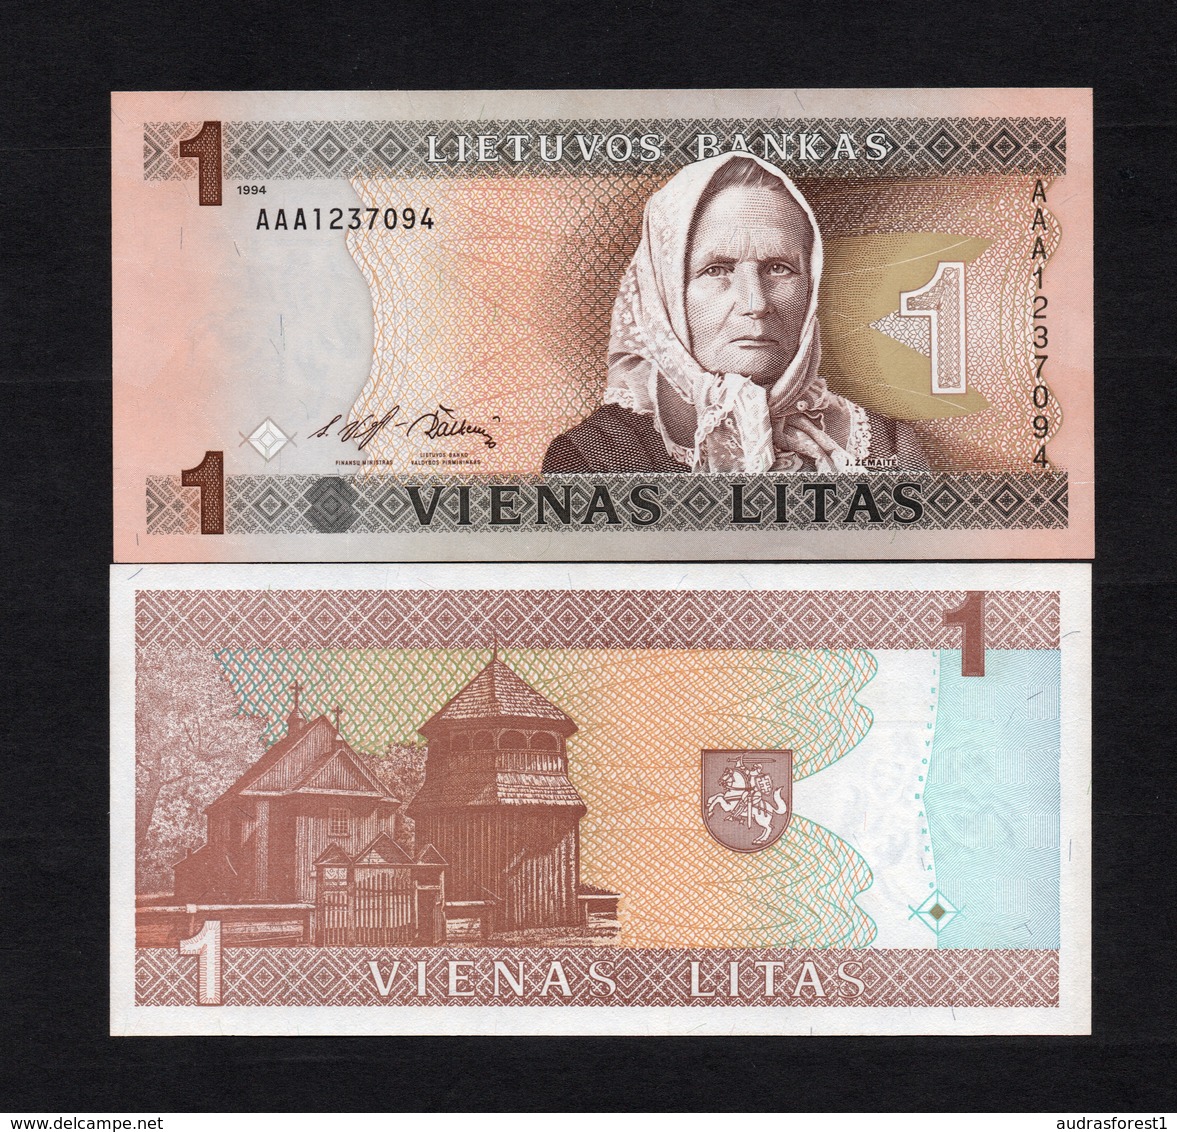 1994 AAA1237094 LITUANIE, LITUAN, LITHUANIA VIENAS LITAS UNC Very Early Printing . Image Mrs J. ŽEMAITĖ - Lituanie